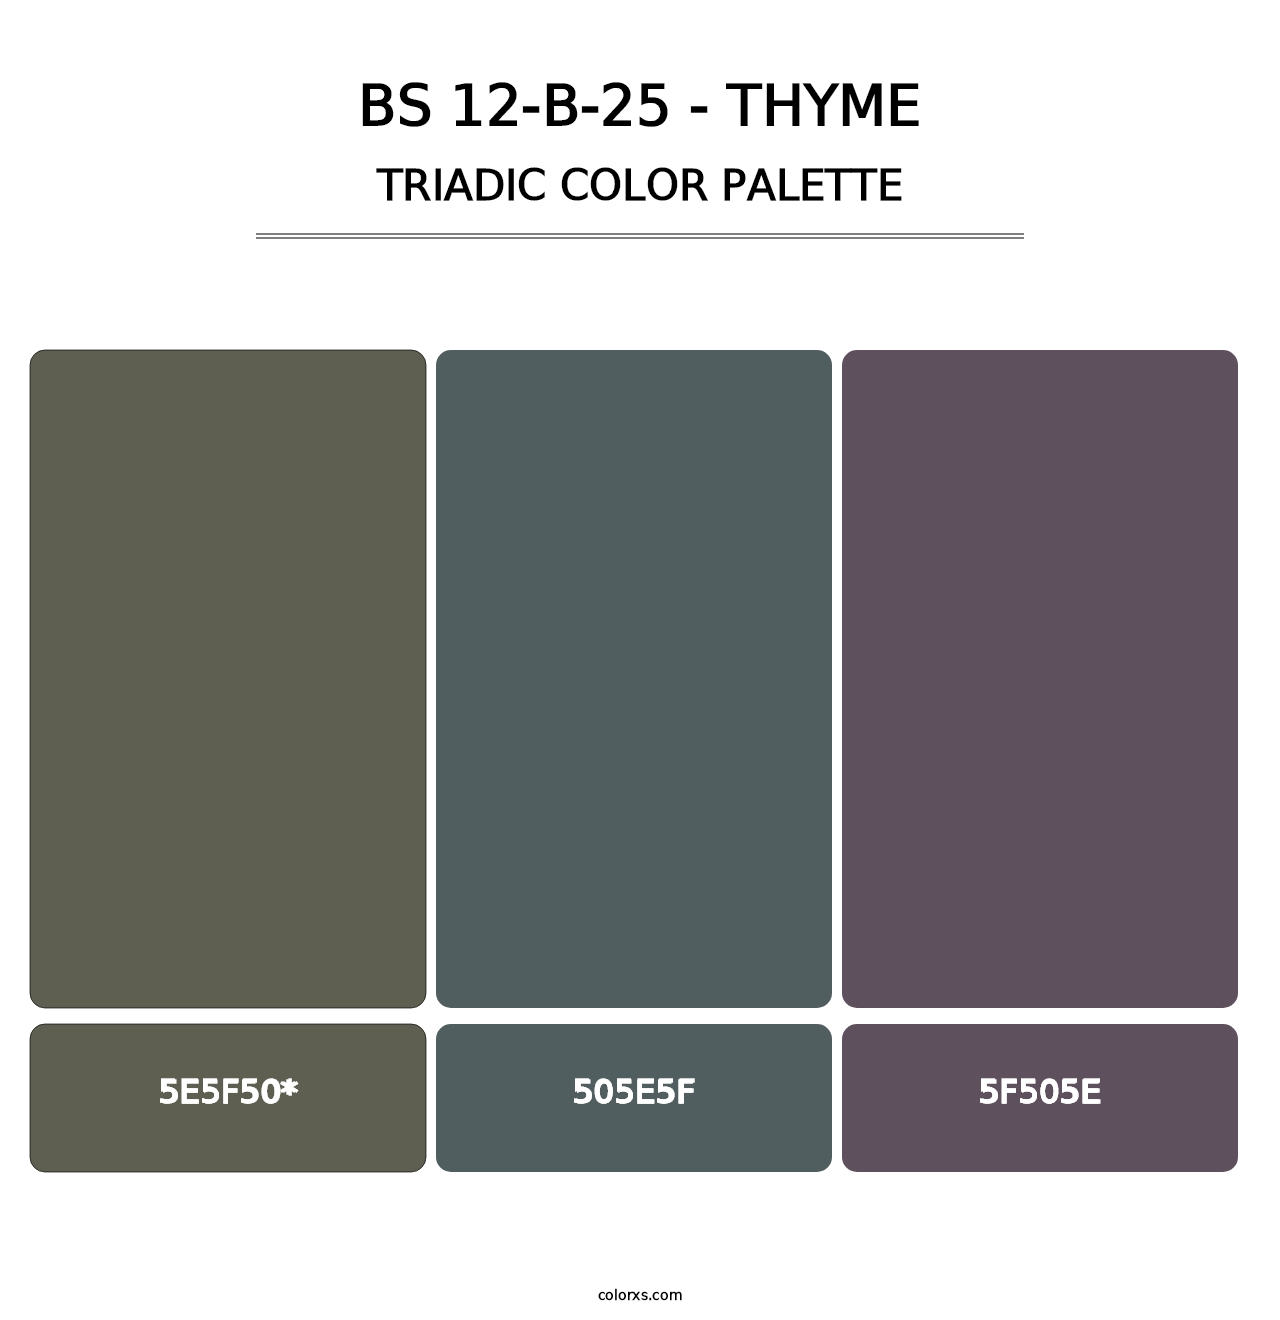 BS 12-B-25 - Thyme - Triadic Color Palette